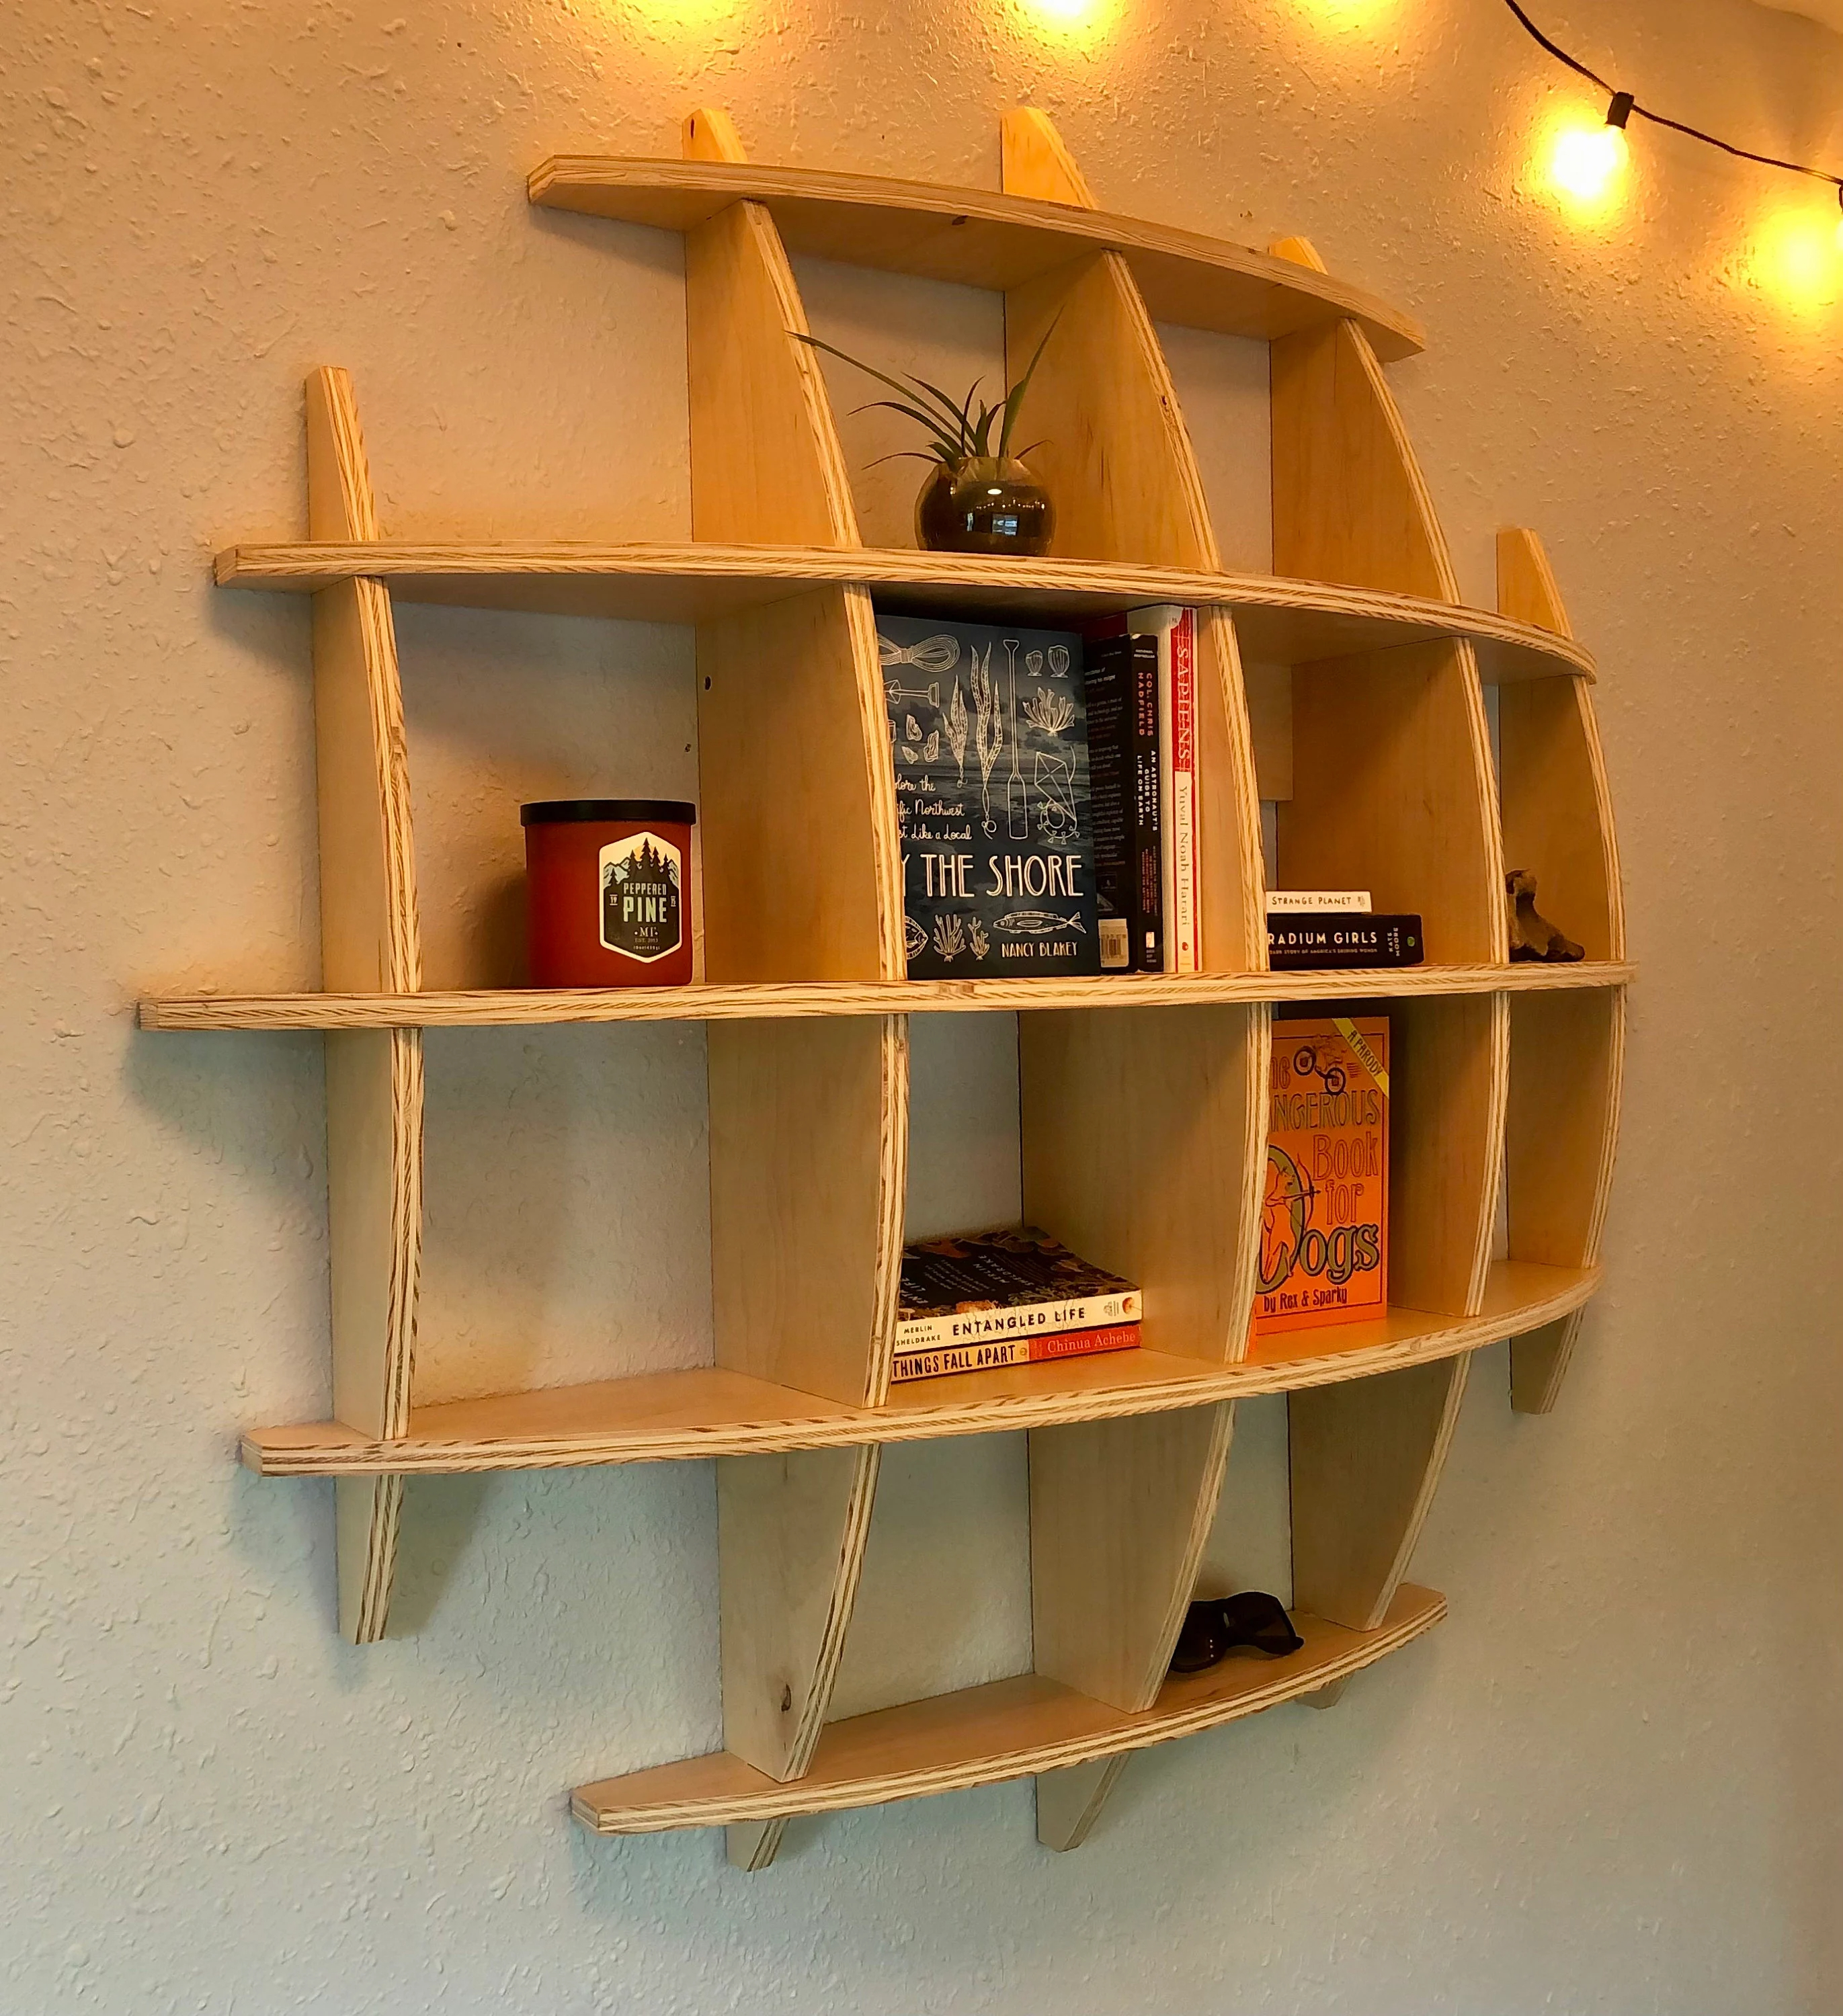 Wooden Wall Shelf, Sphere Bookcase, Round Hanging Wall Geometric Shelf, Office shelf